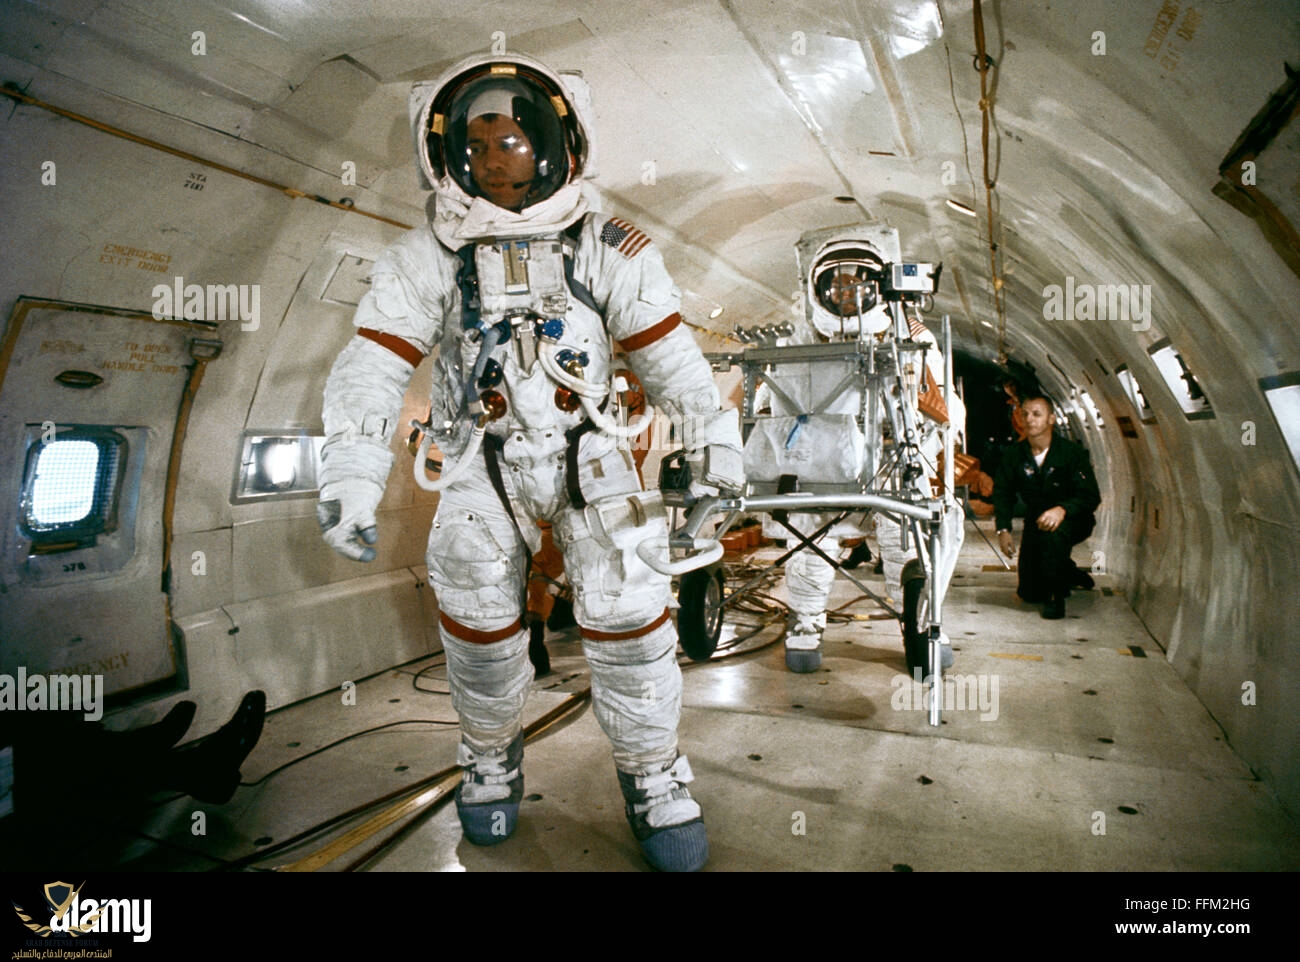 nasa-apollo-14-astronauts-alan-b-shepard-jr-left-pulls-the-modular-FFM2HG.jpg